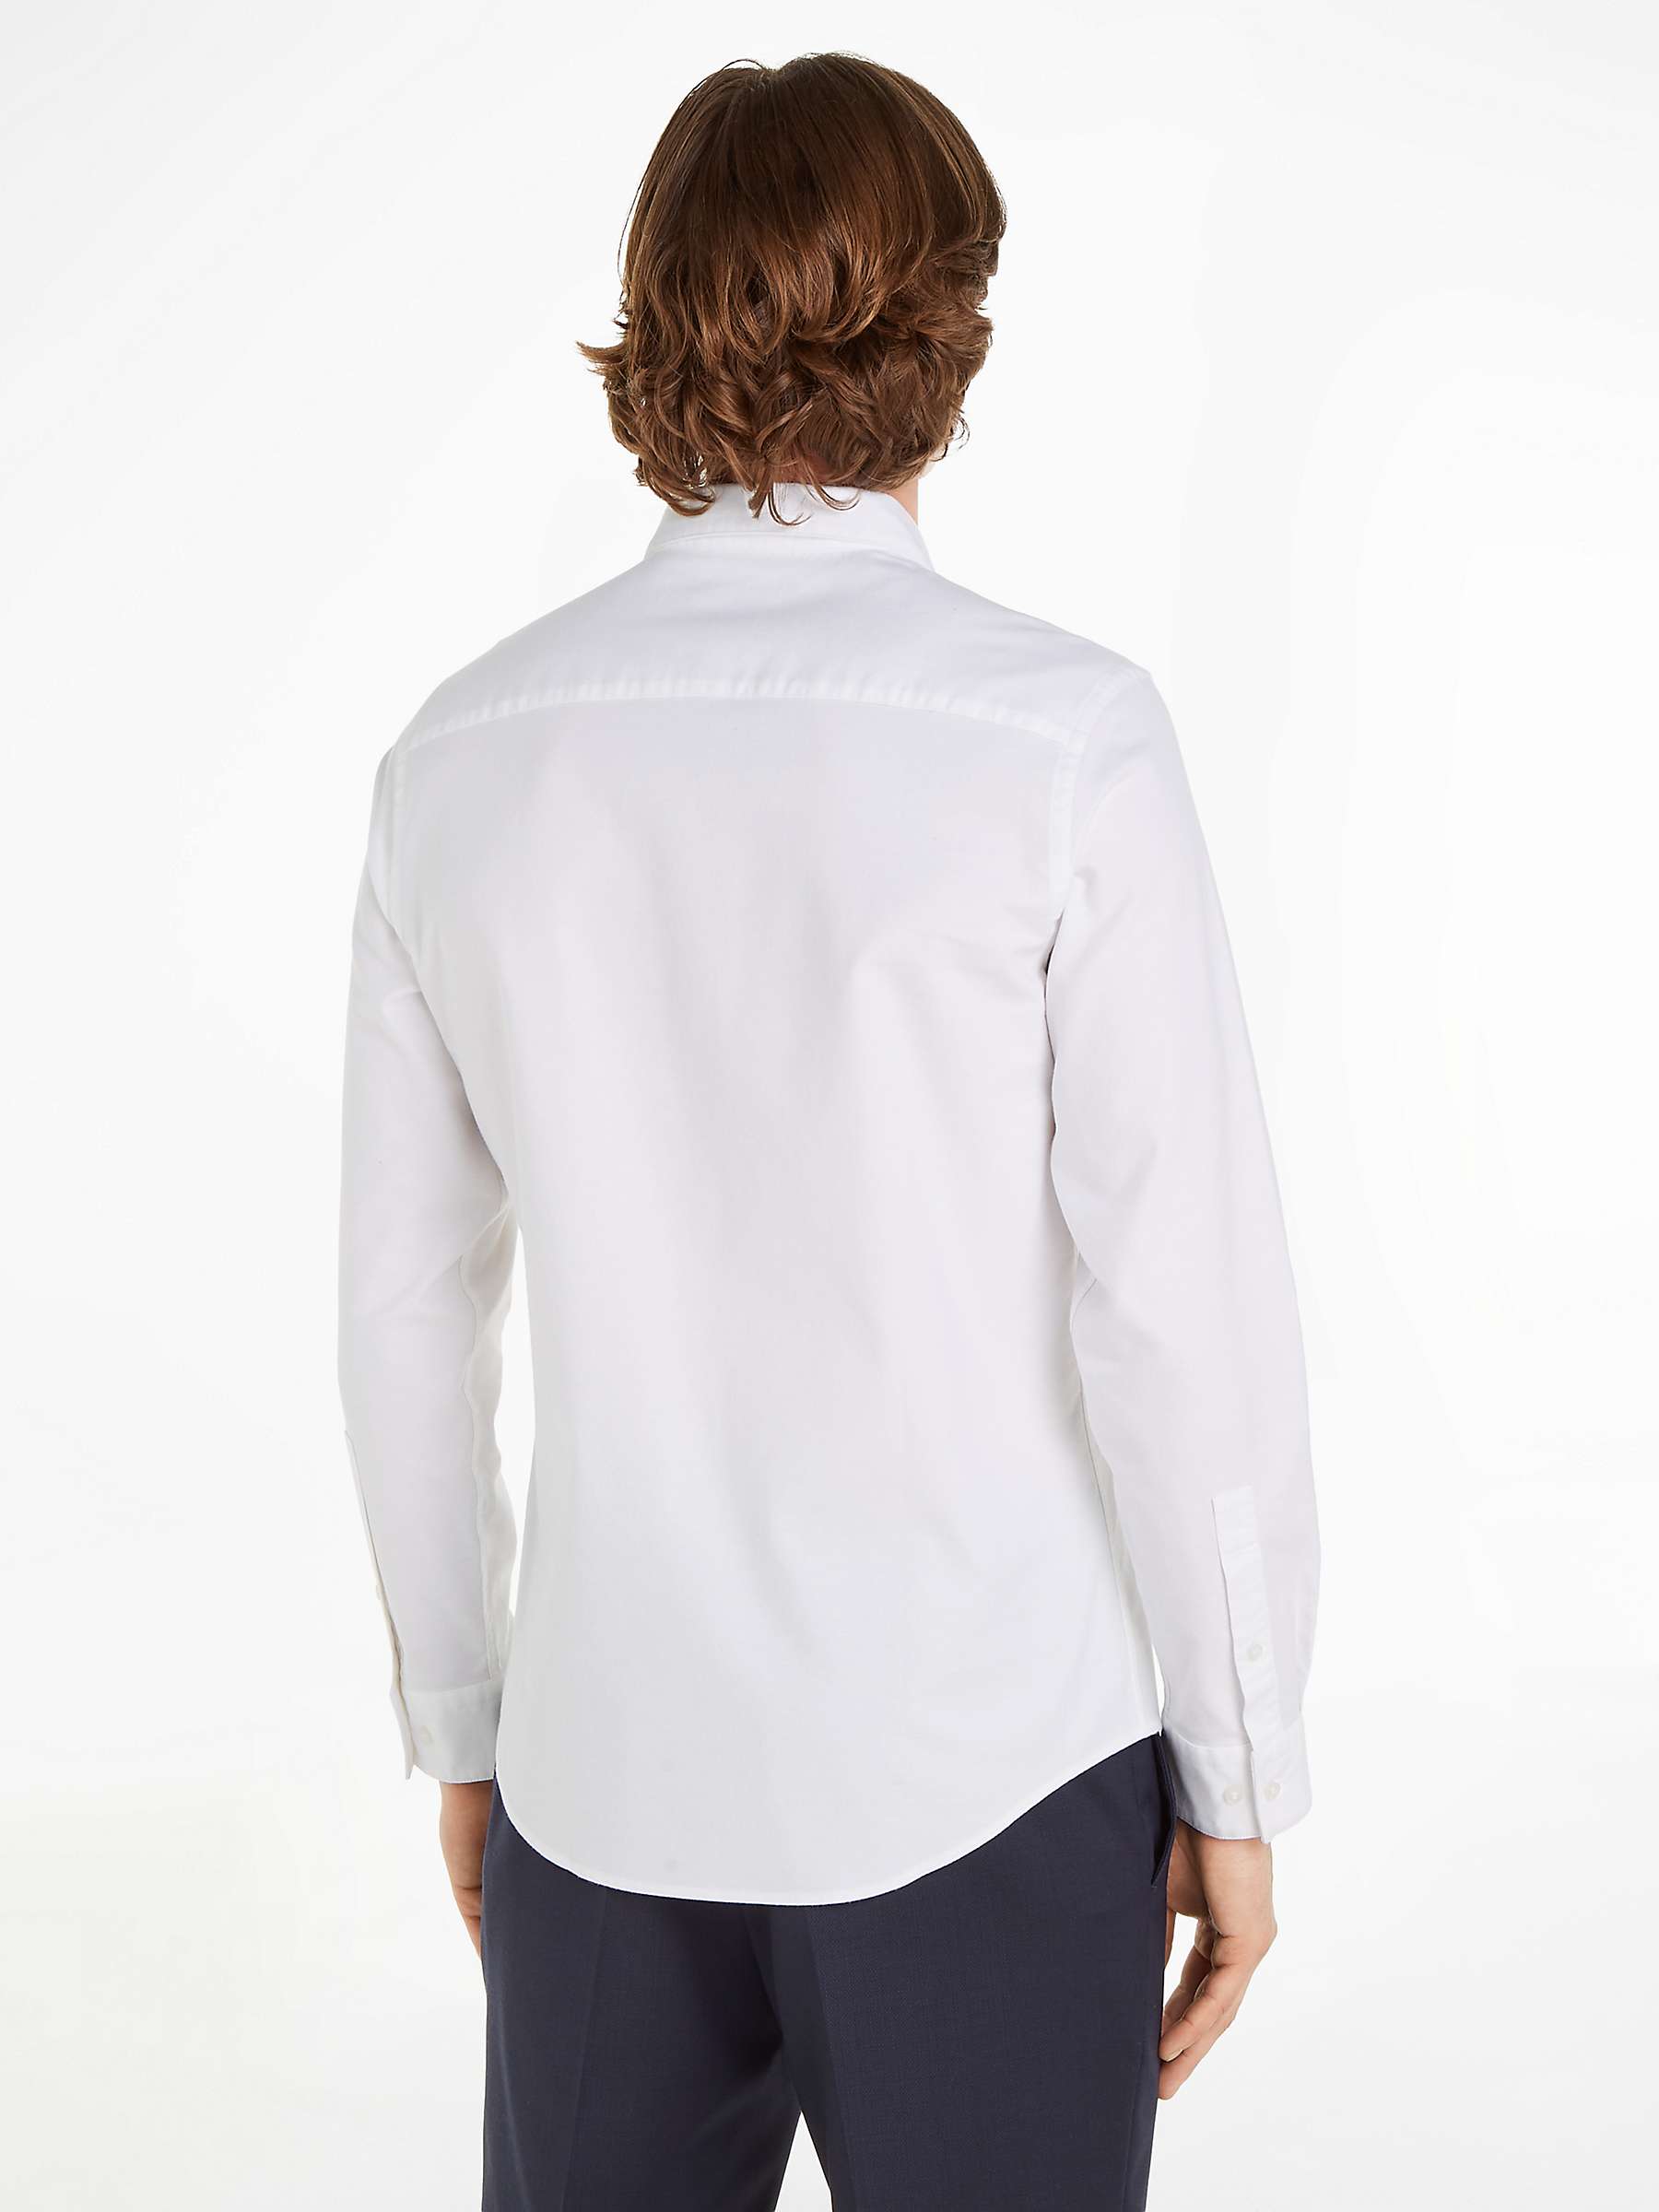 Buy Calvin Klein Stretch Oxford Long Sleeve Shirt, White Online at johnlewis.com